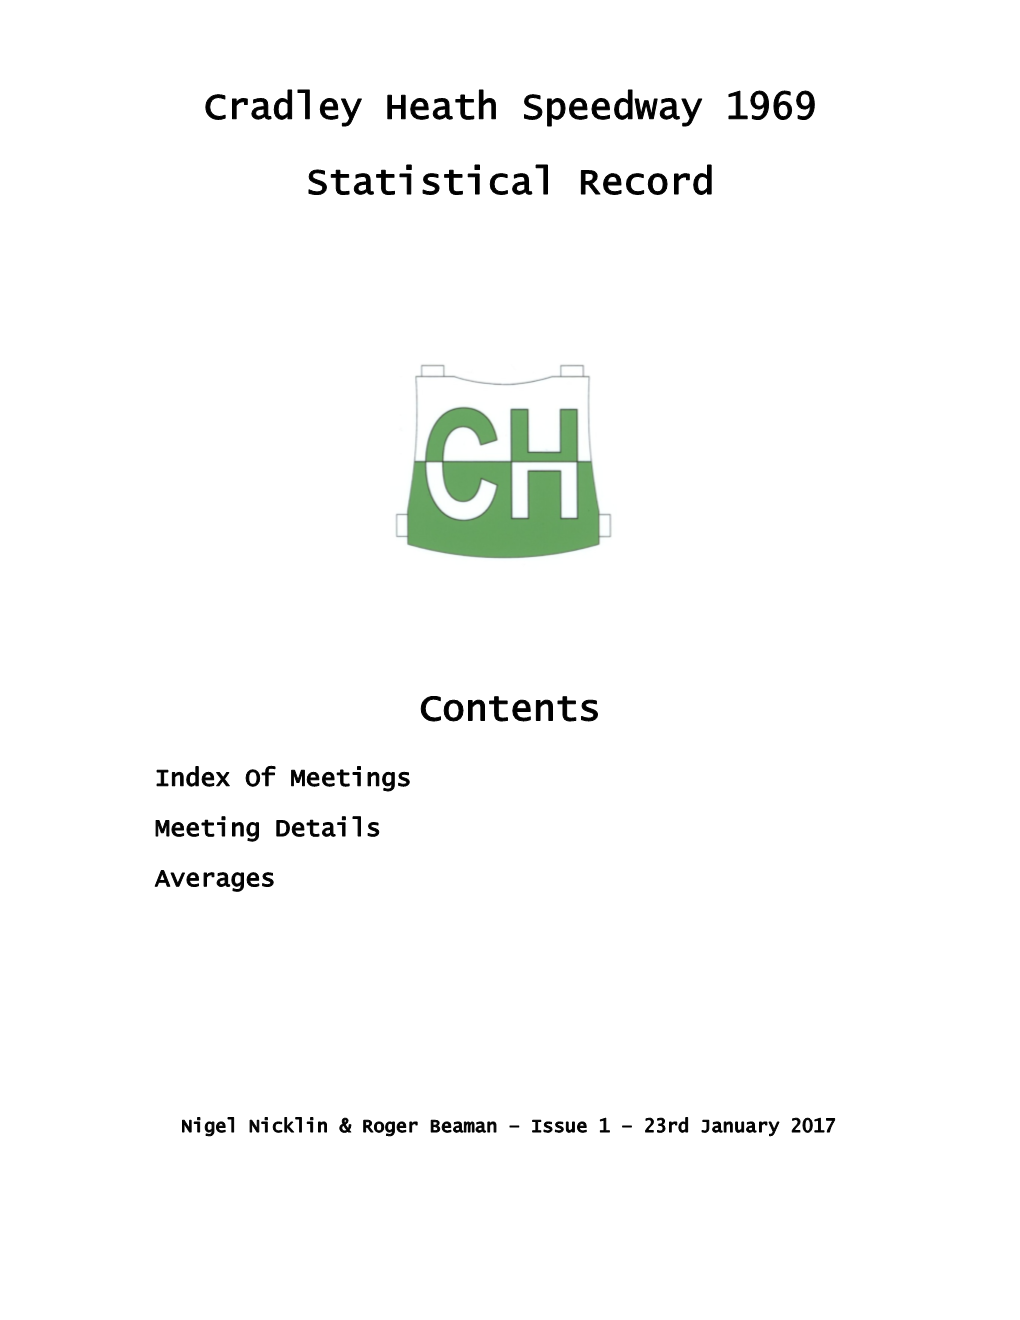 Cradley Heath Speedway 1969 Statistical Record Contents